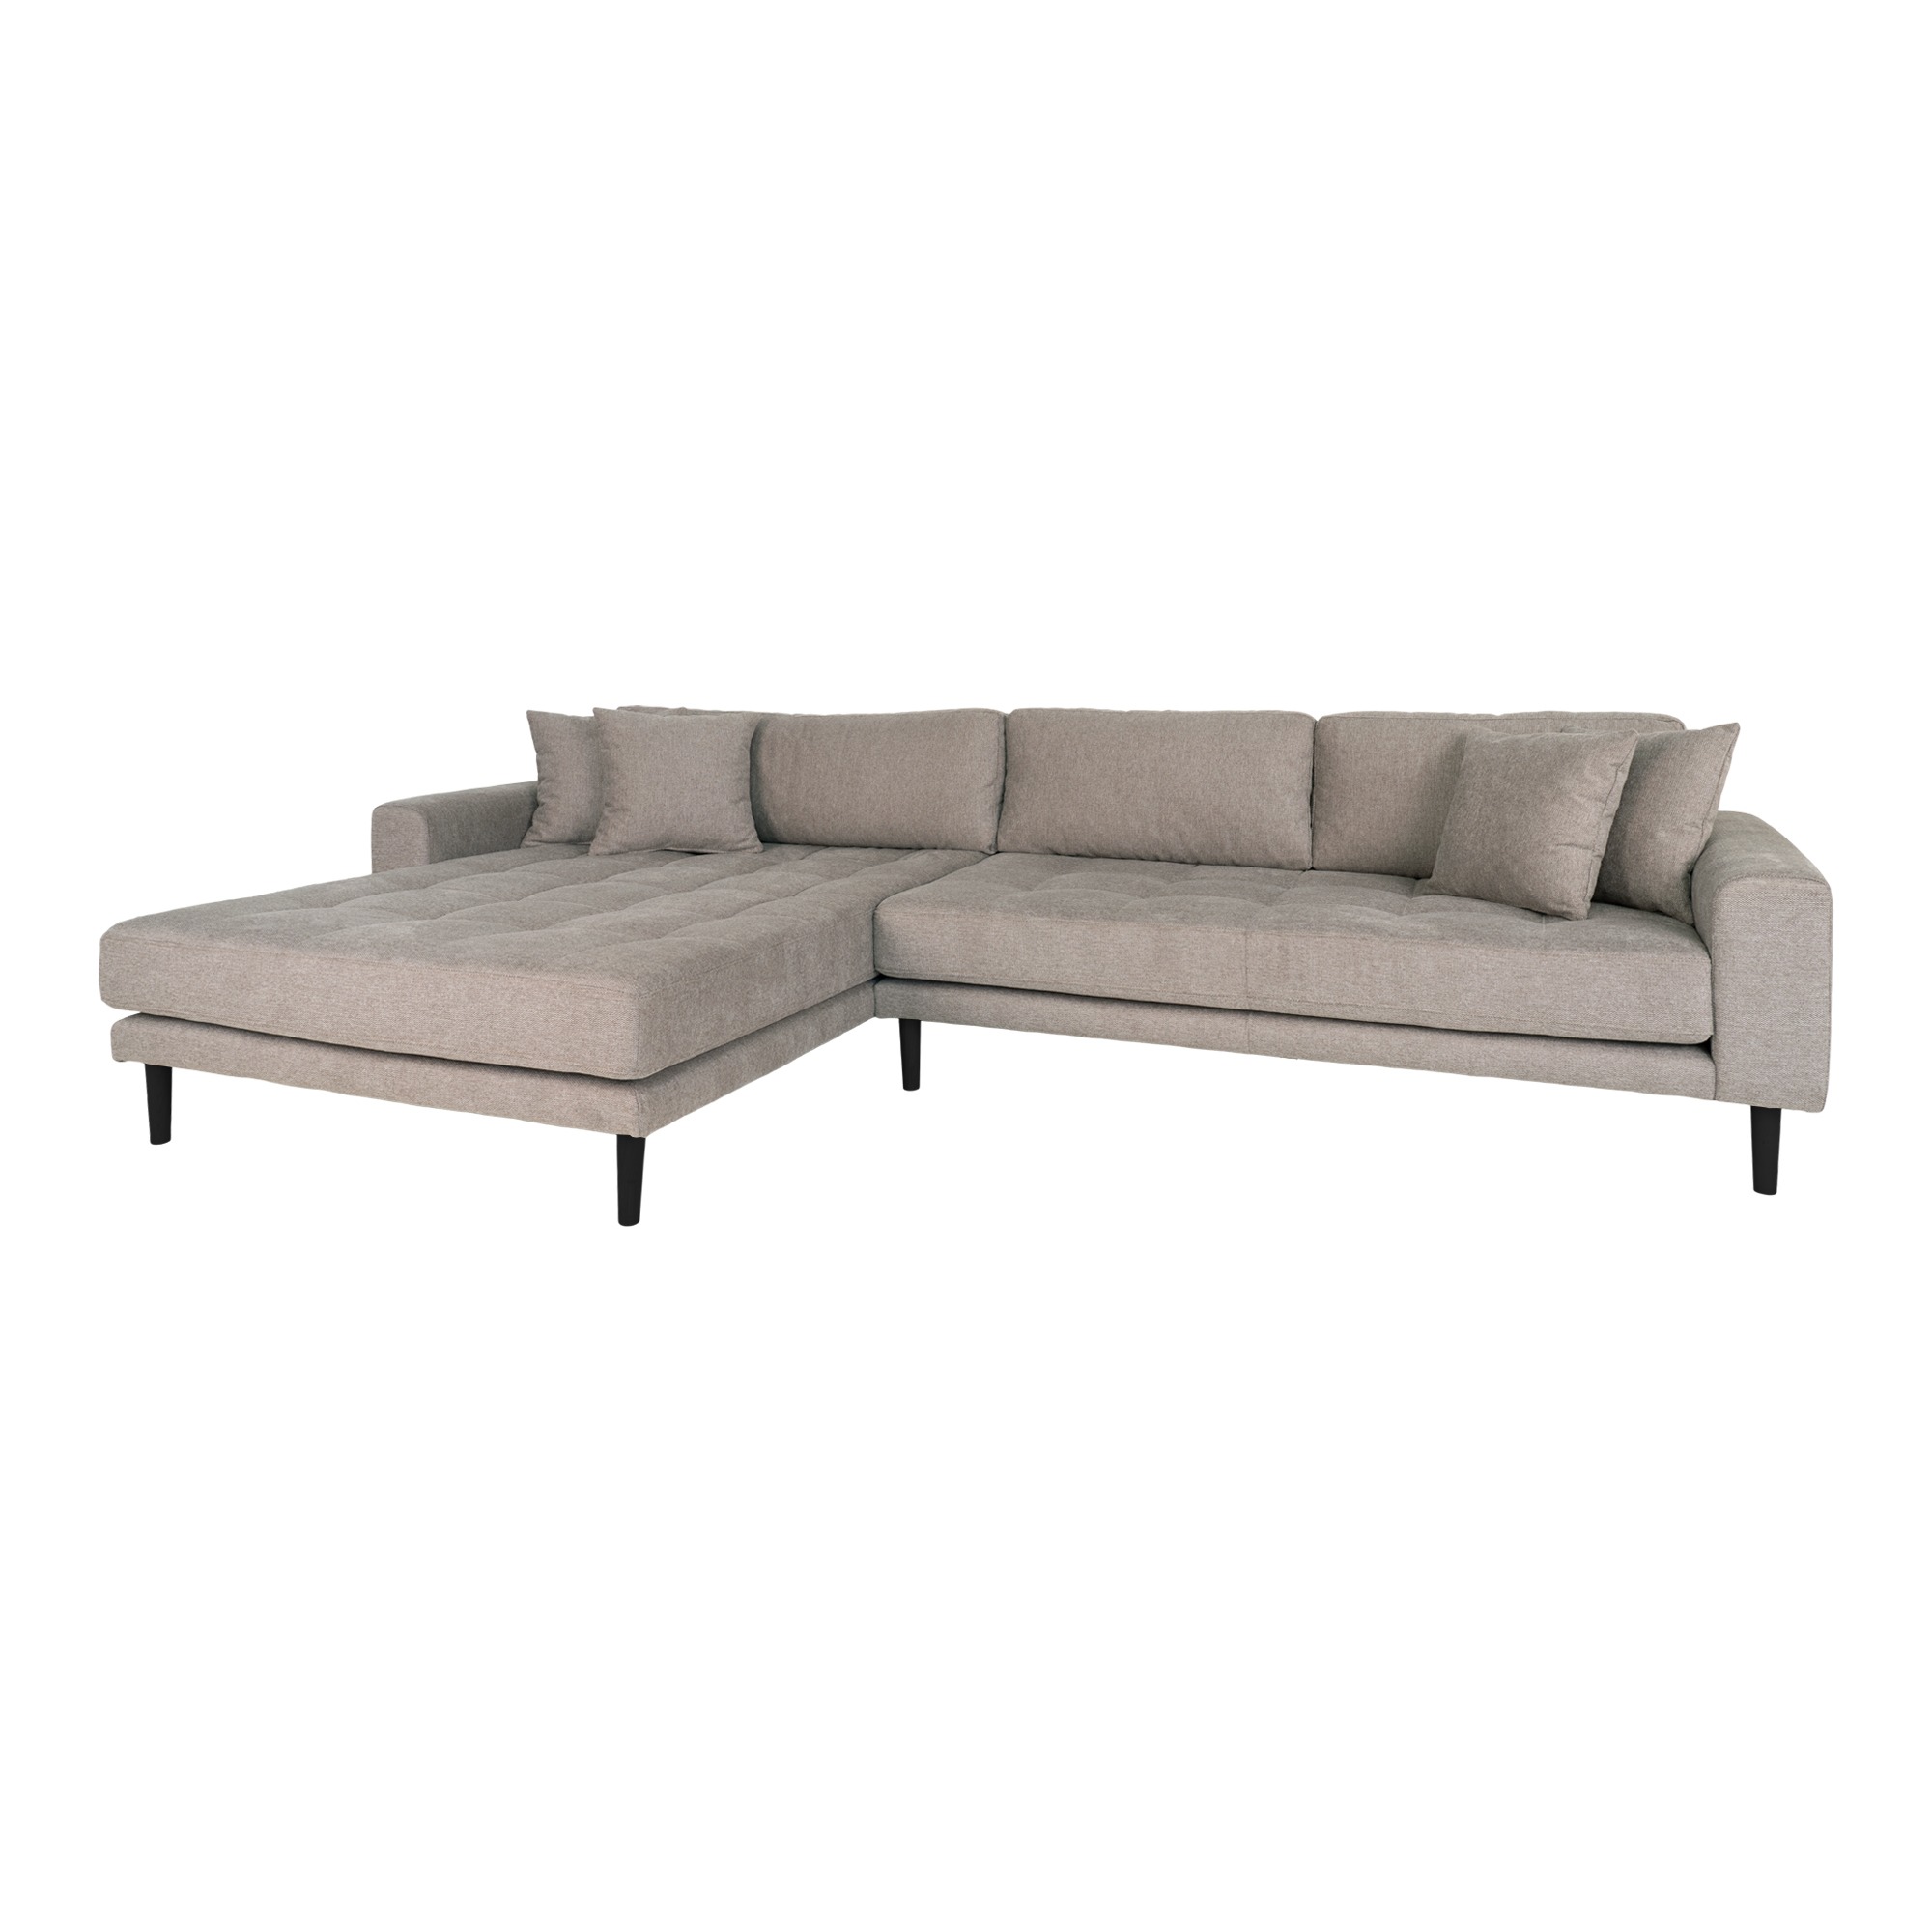 Lido lounge sofa 1301486